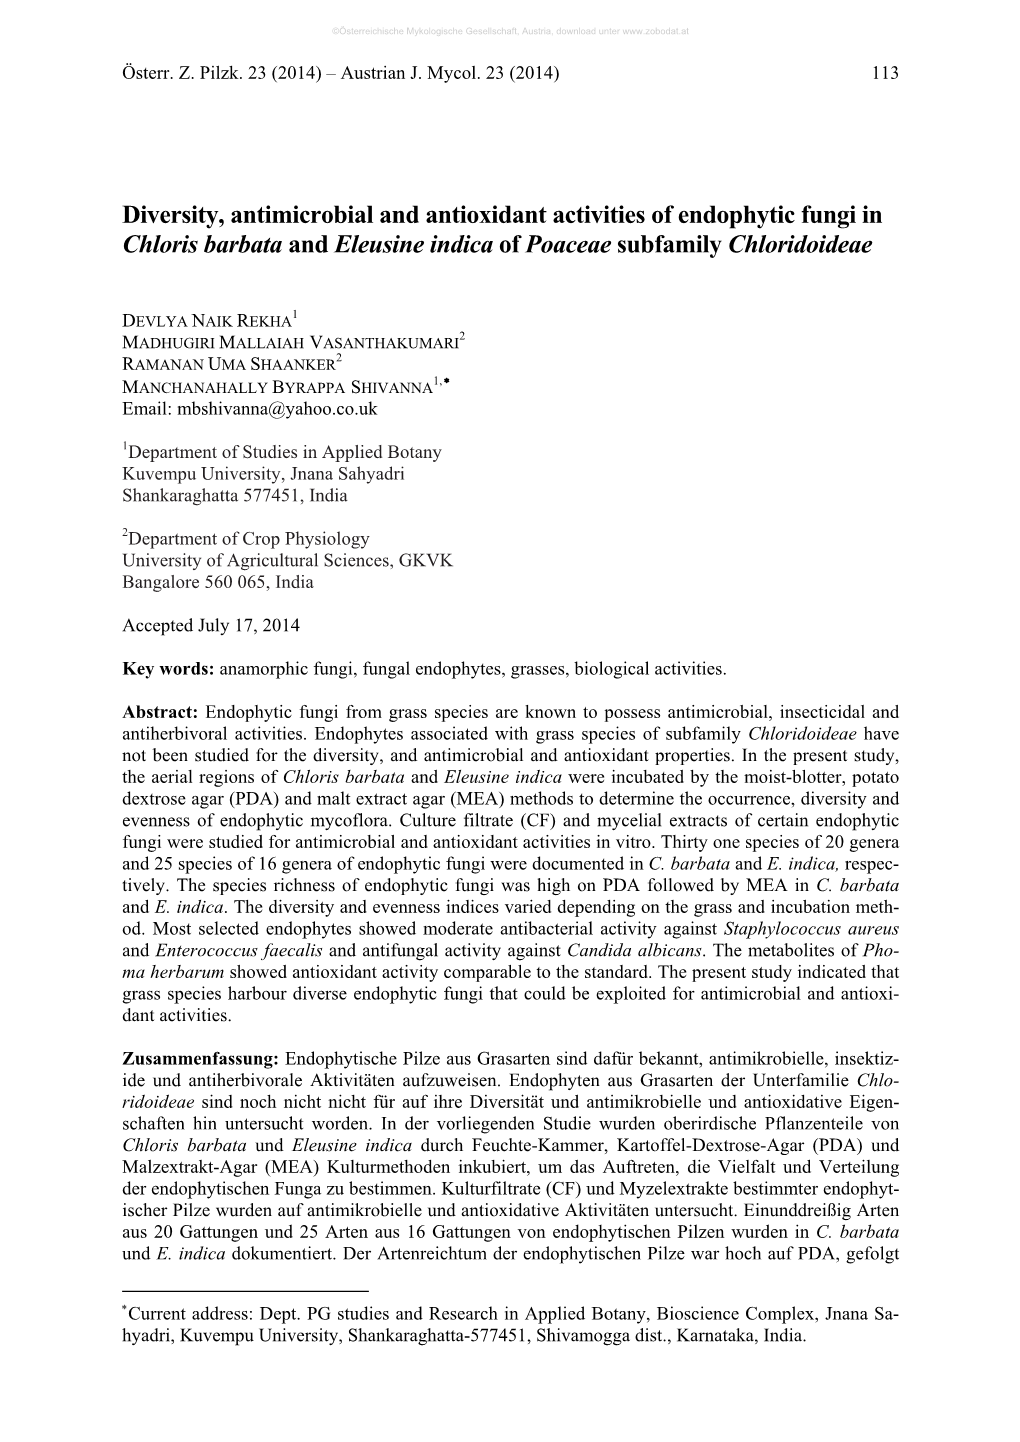 Diversity, Antimicrobial and Antioxidant Activities of Endophytic Fungi in Chloris Barbata and Eleusine Indica of Poaceae Subfamily Chloridoideae